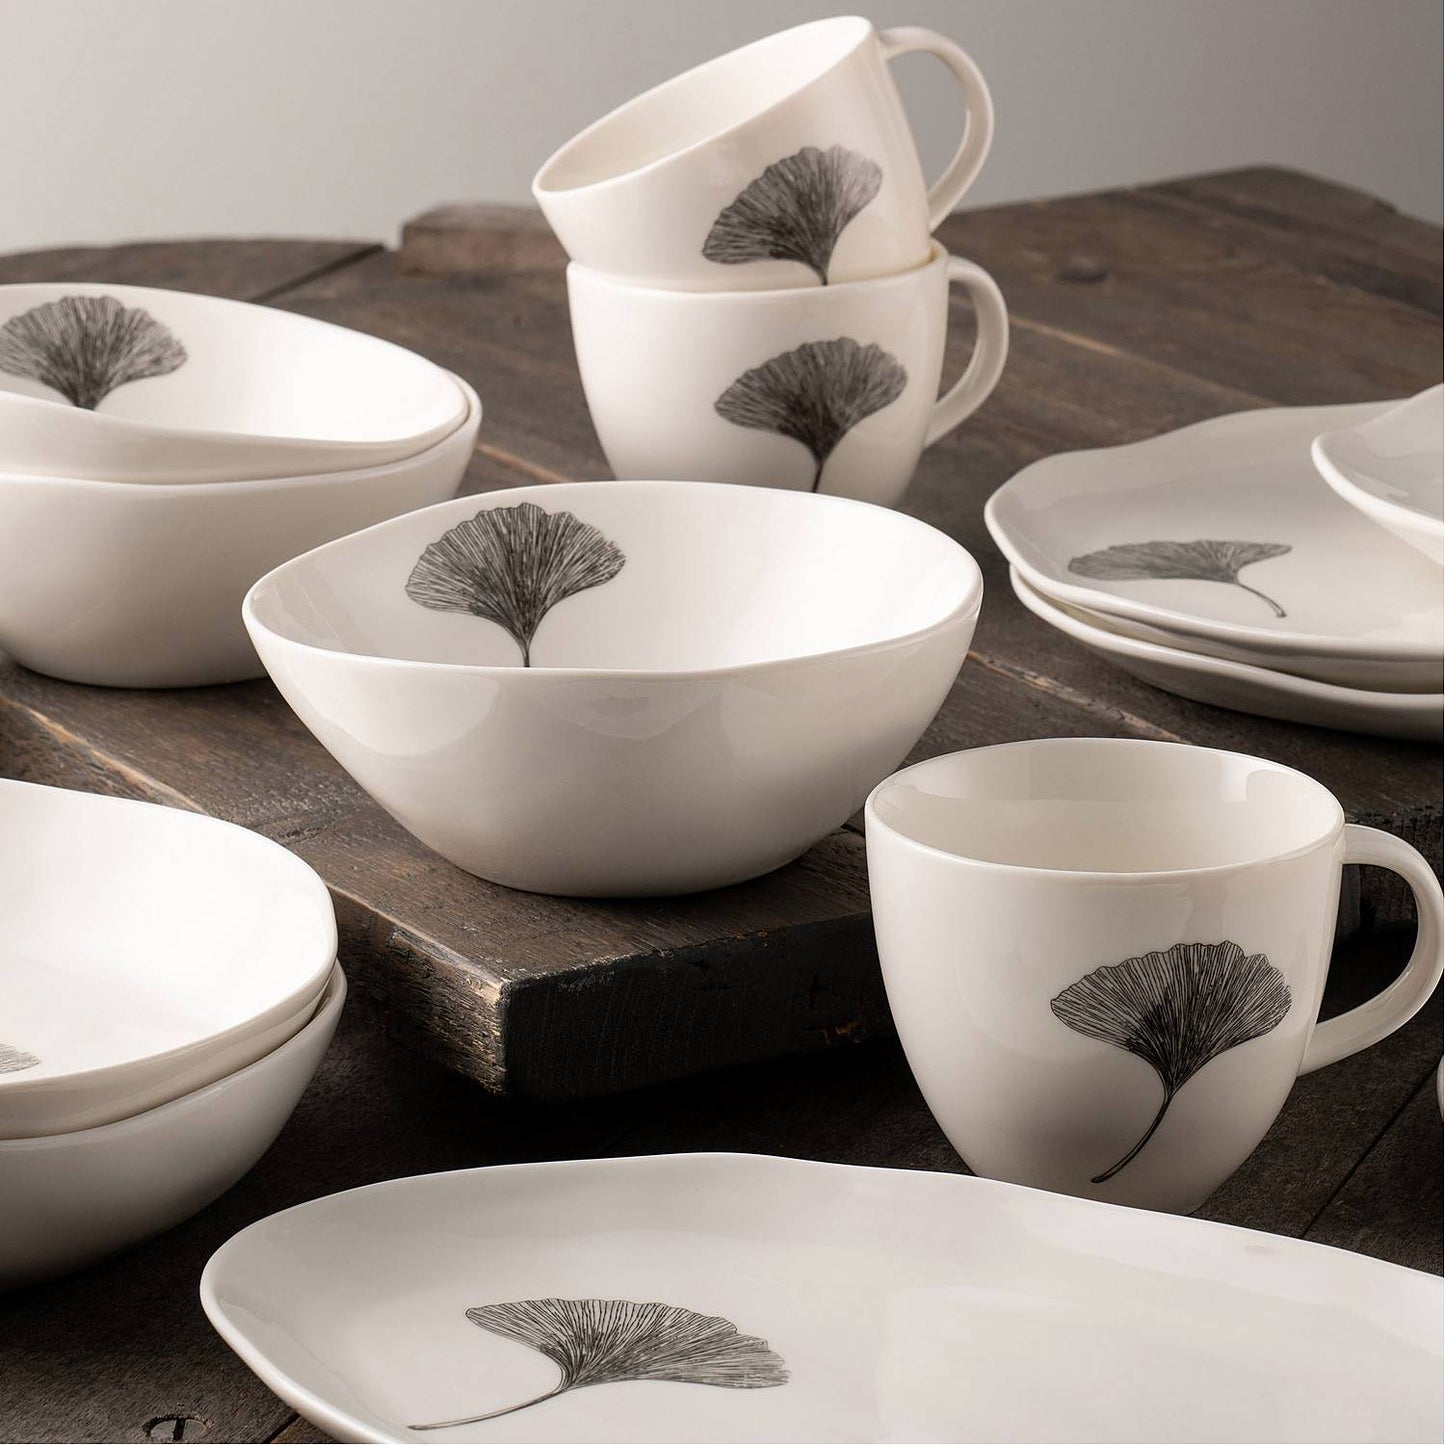 Belleek Gingko Leaf Mug Set │9410